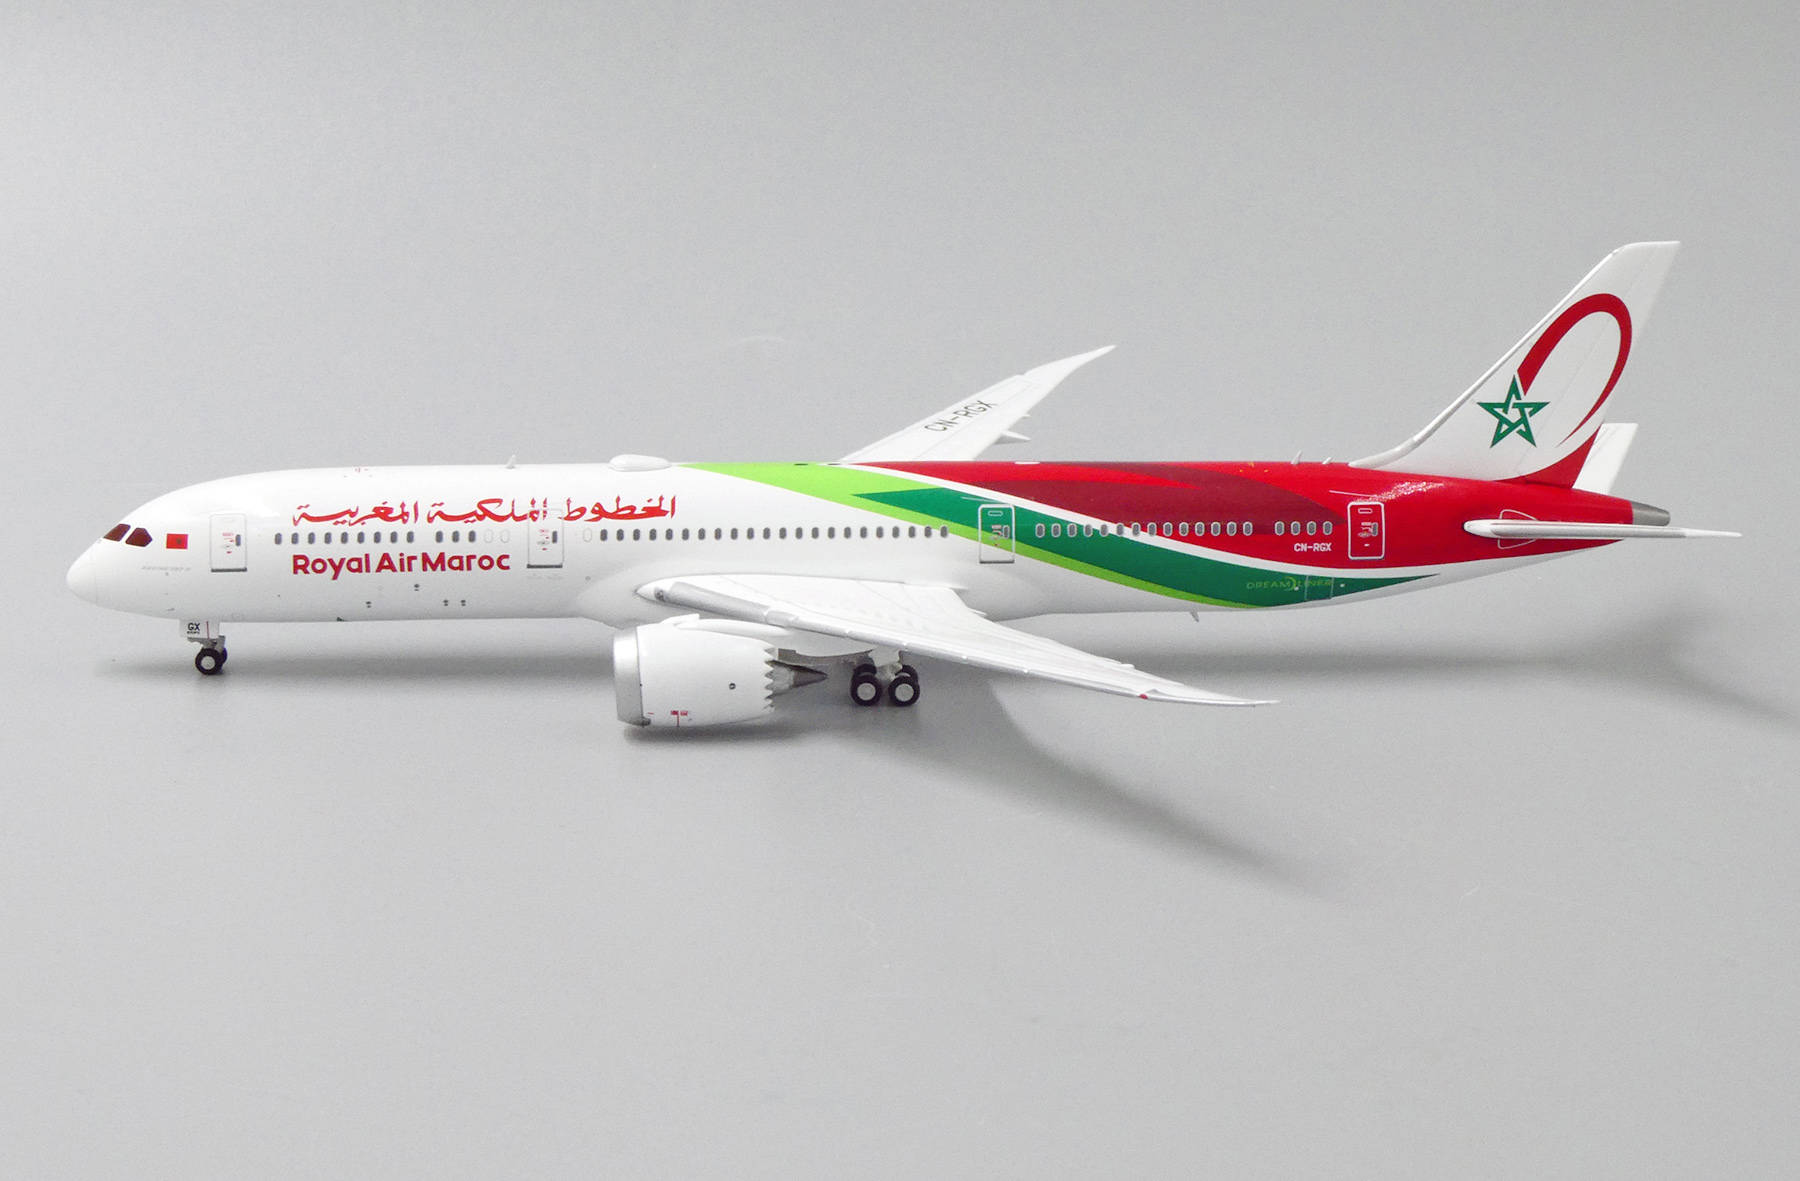 Royal Air Maroc Airplane Toy Model Wallpaper